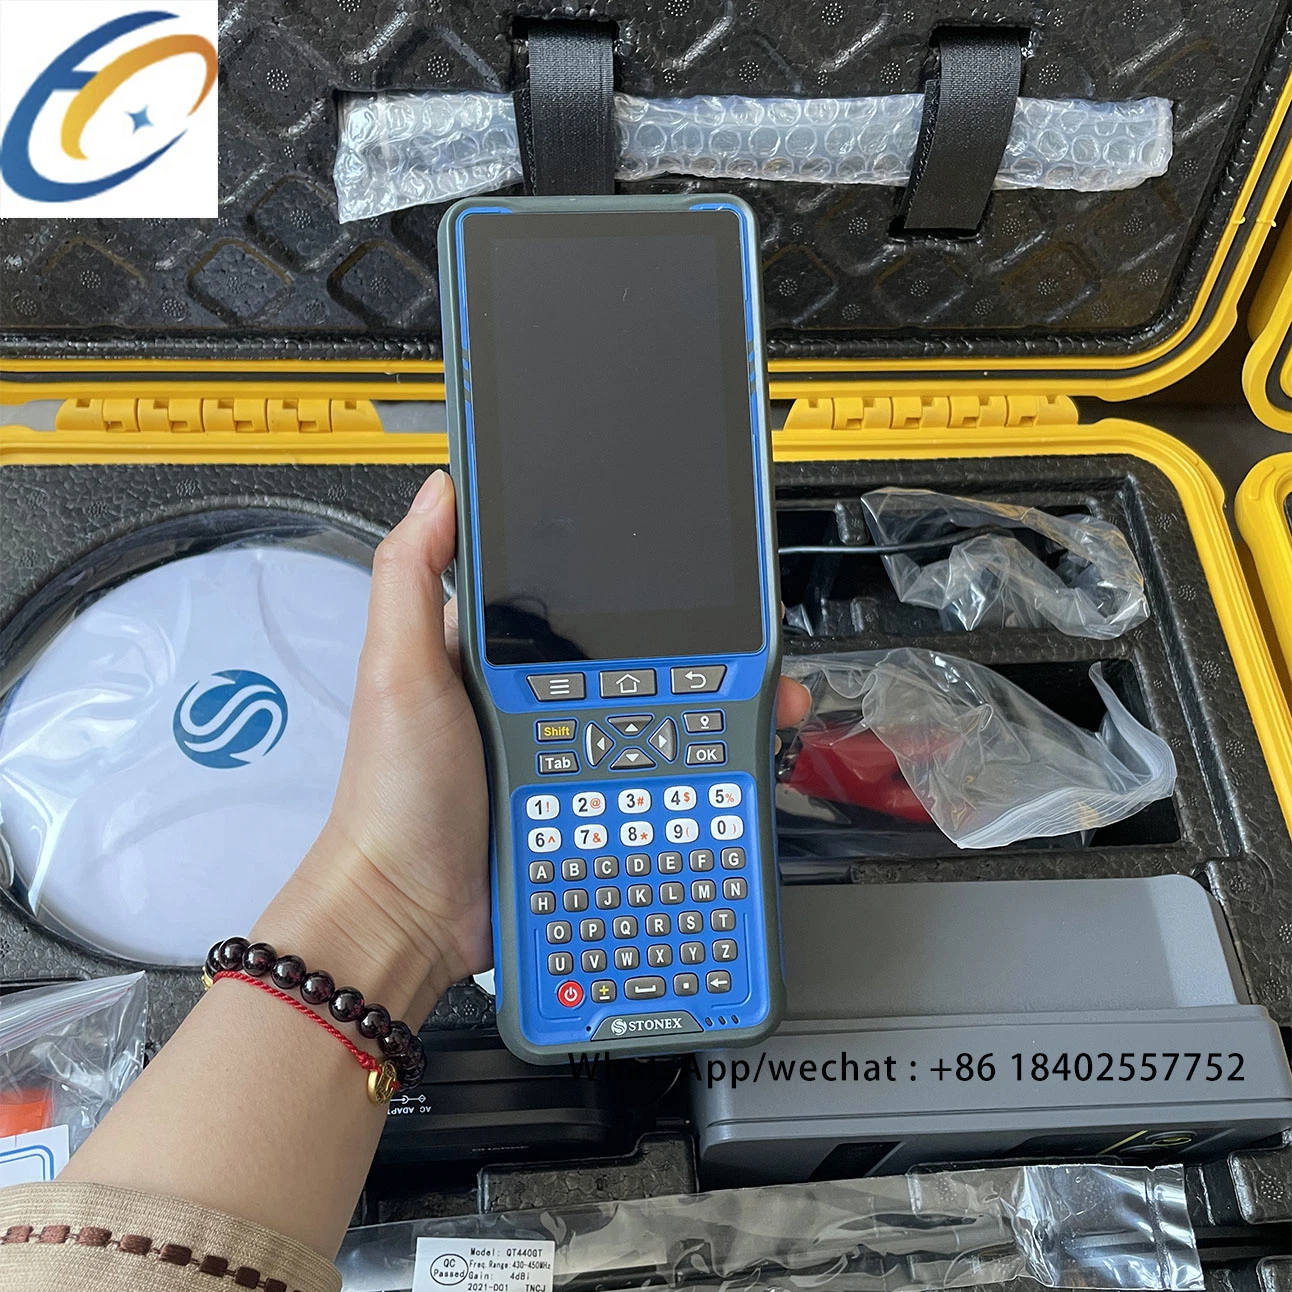 Stonex S9II PRO GPS Receiver Trimble Board Gnss Rtk